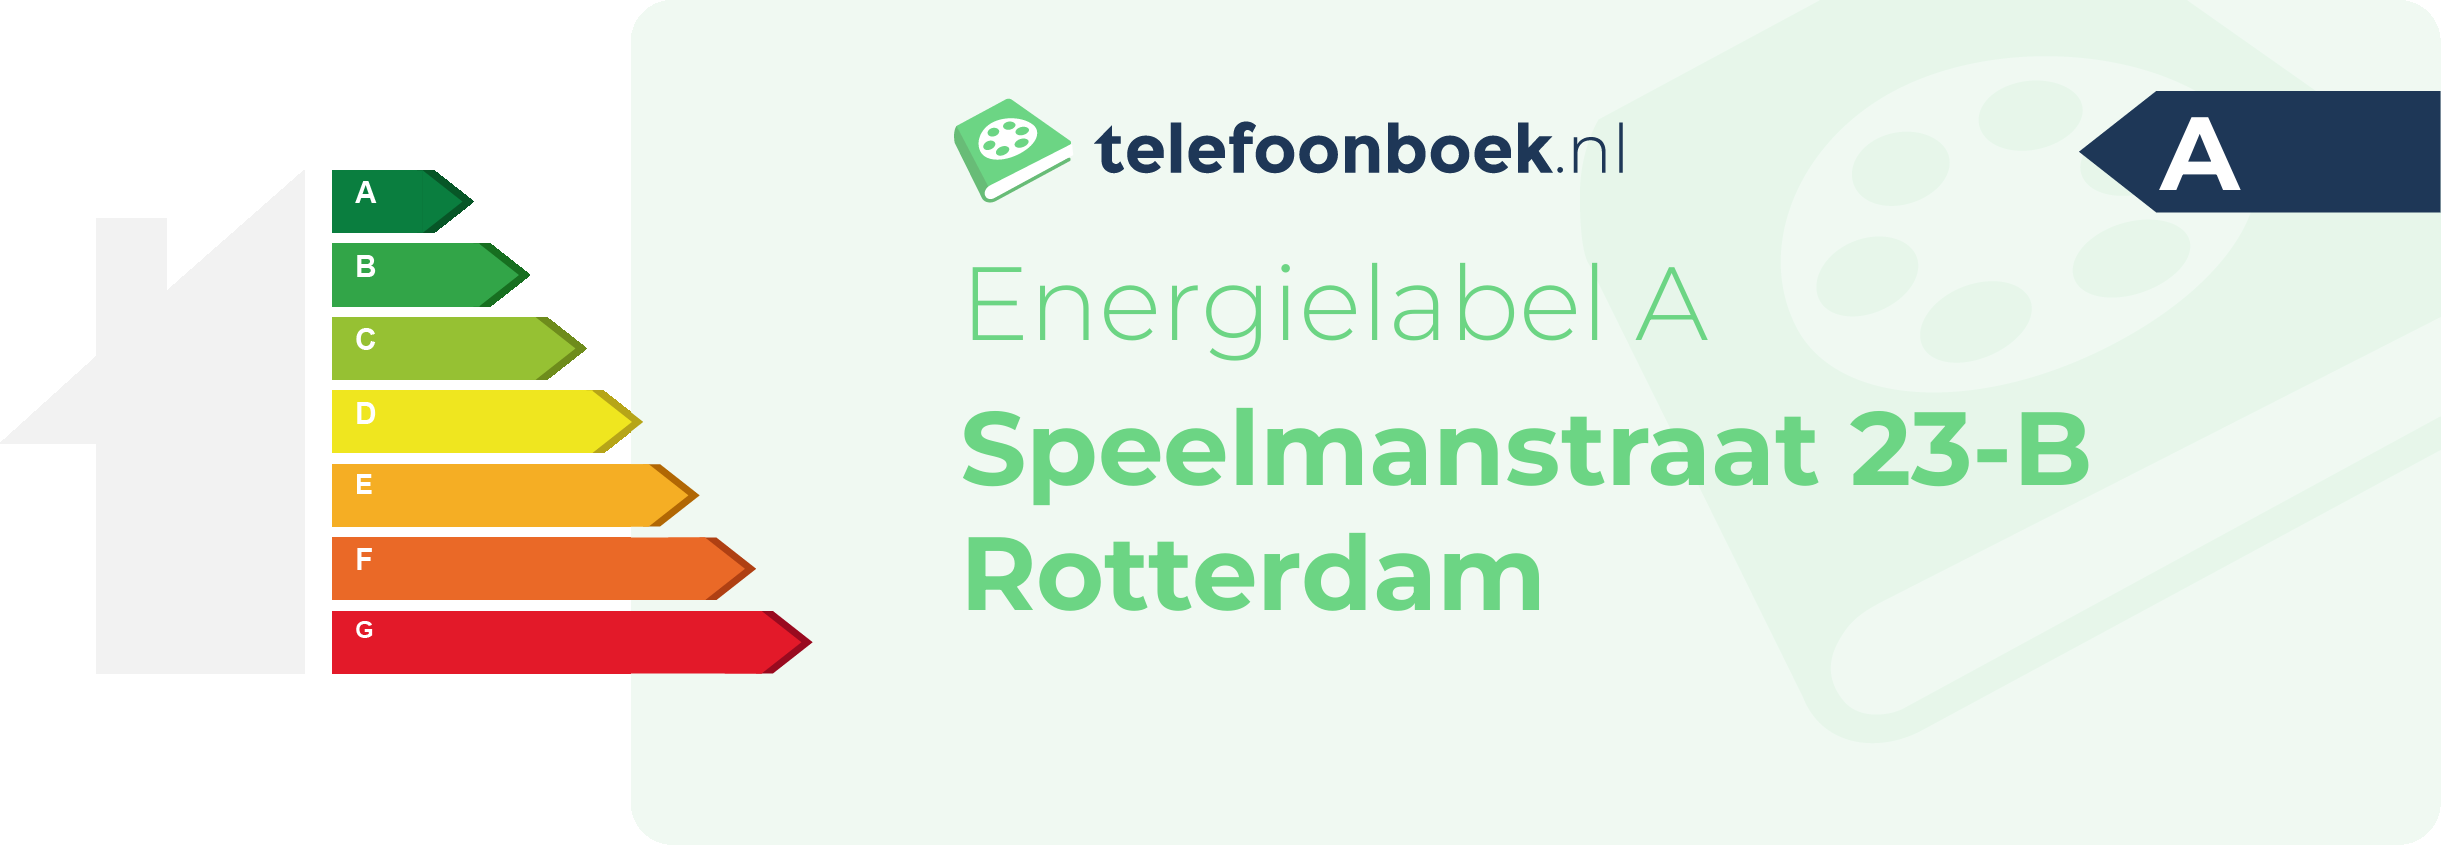 Energielabel Speelmanstraat 23-B Rotterdam